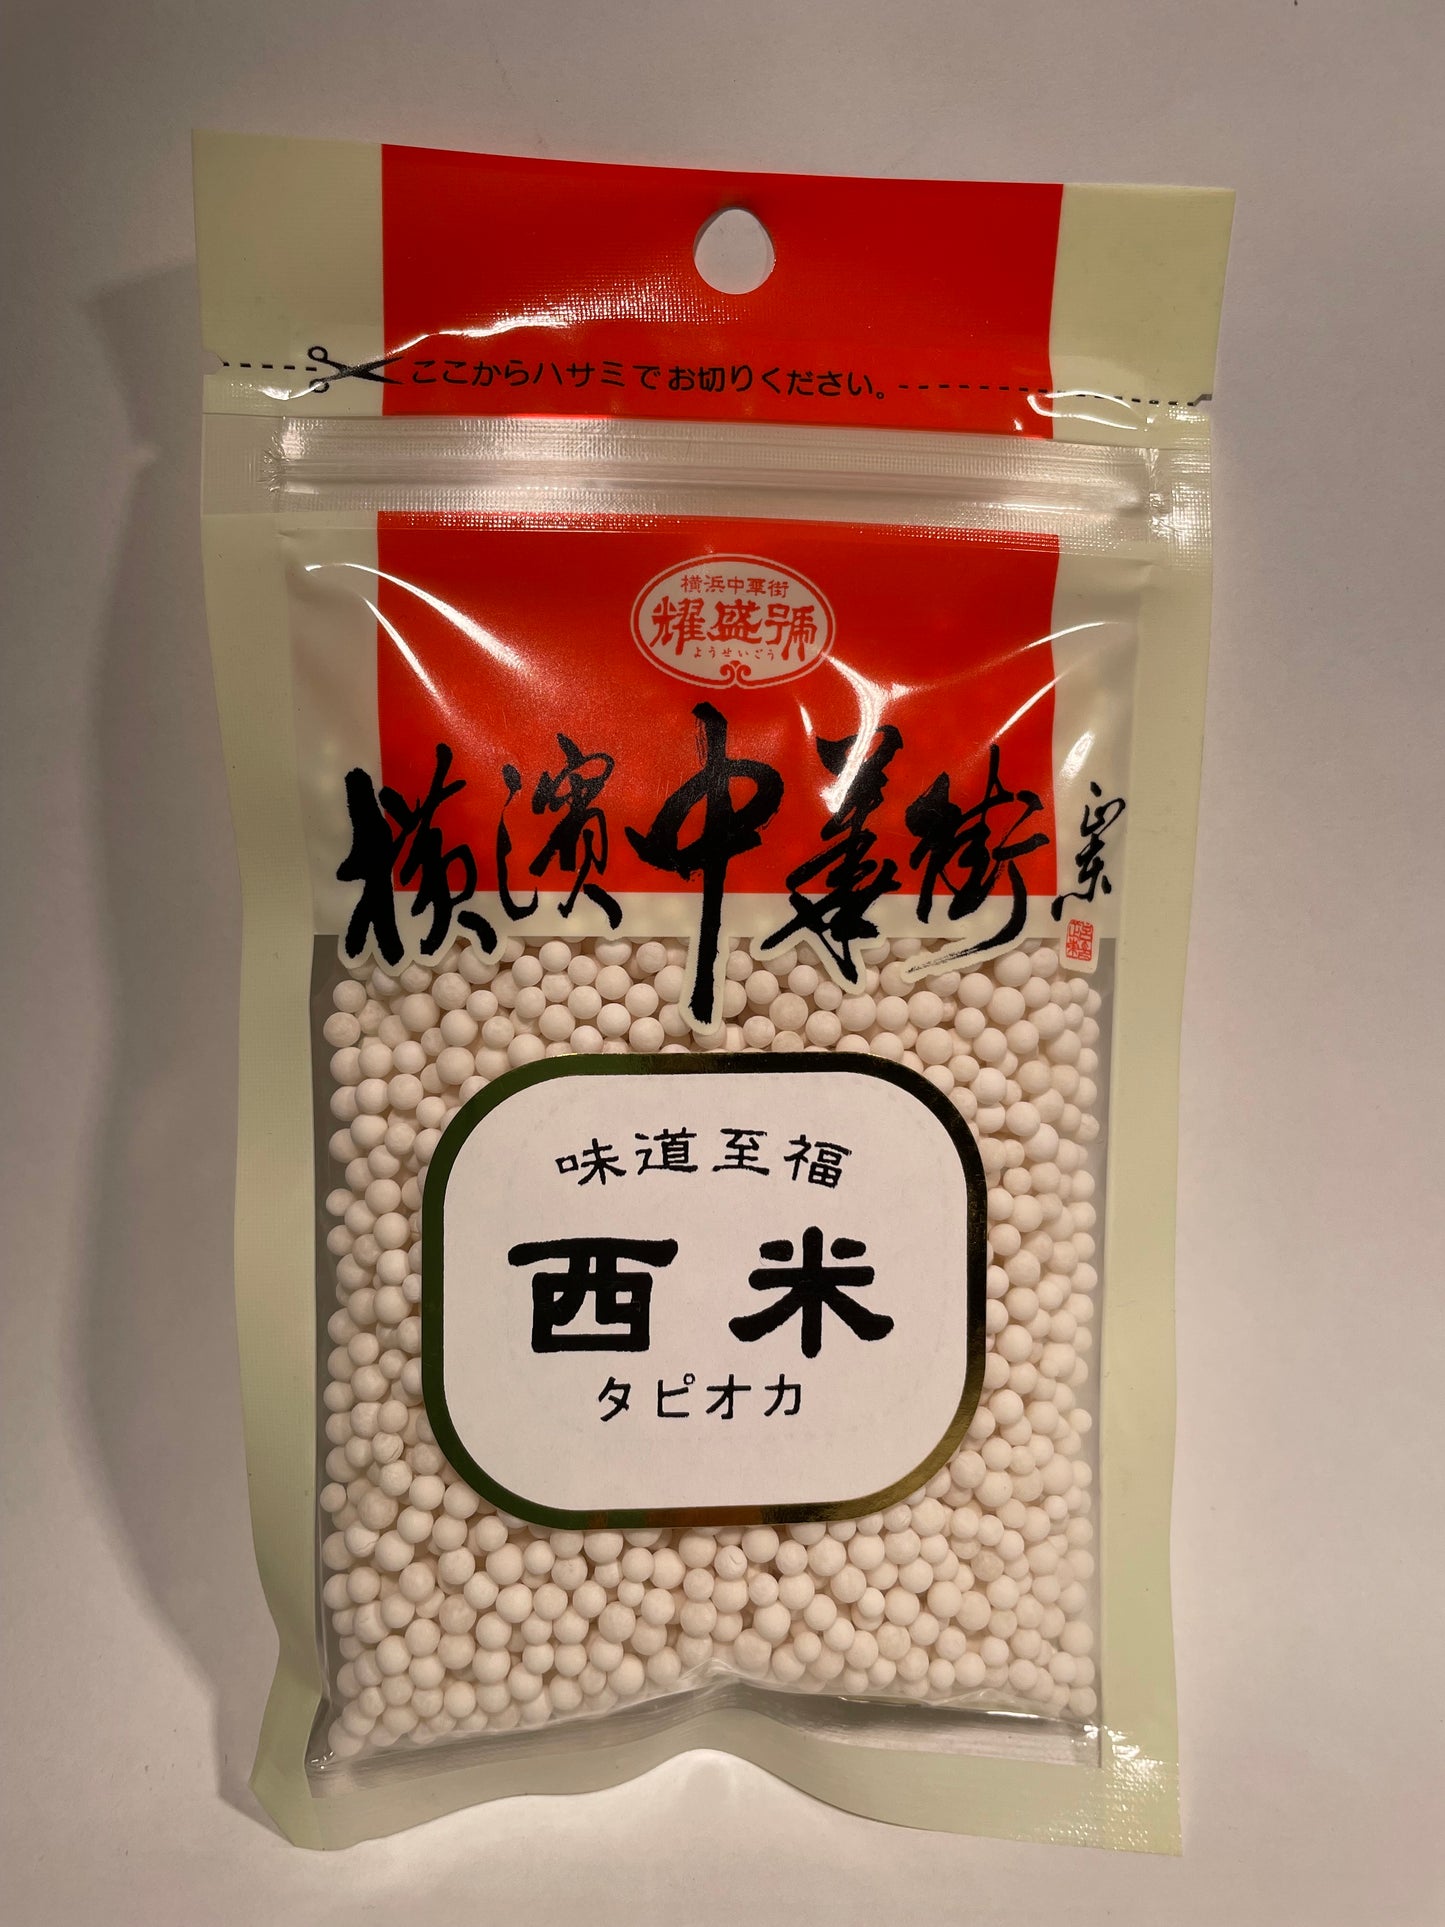 Western rice (tapioca) small grains